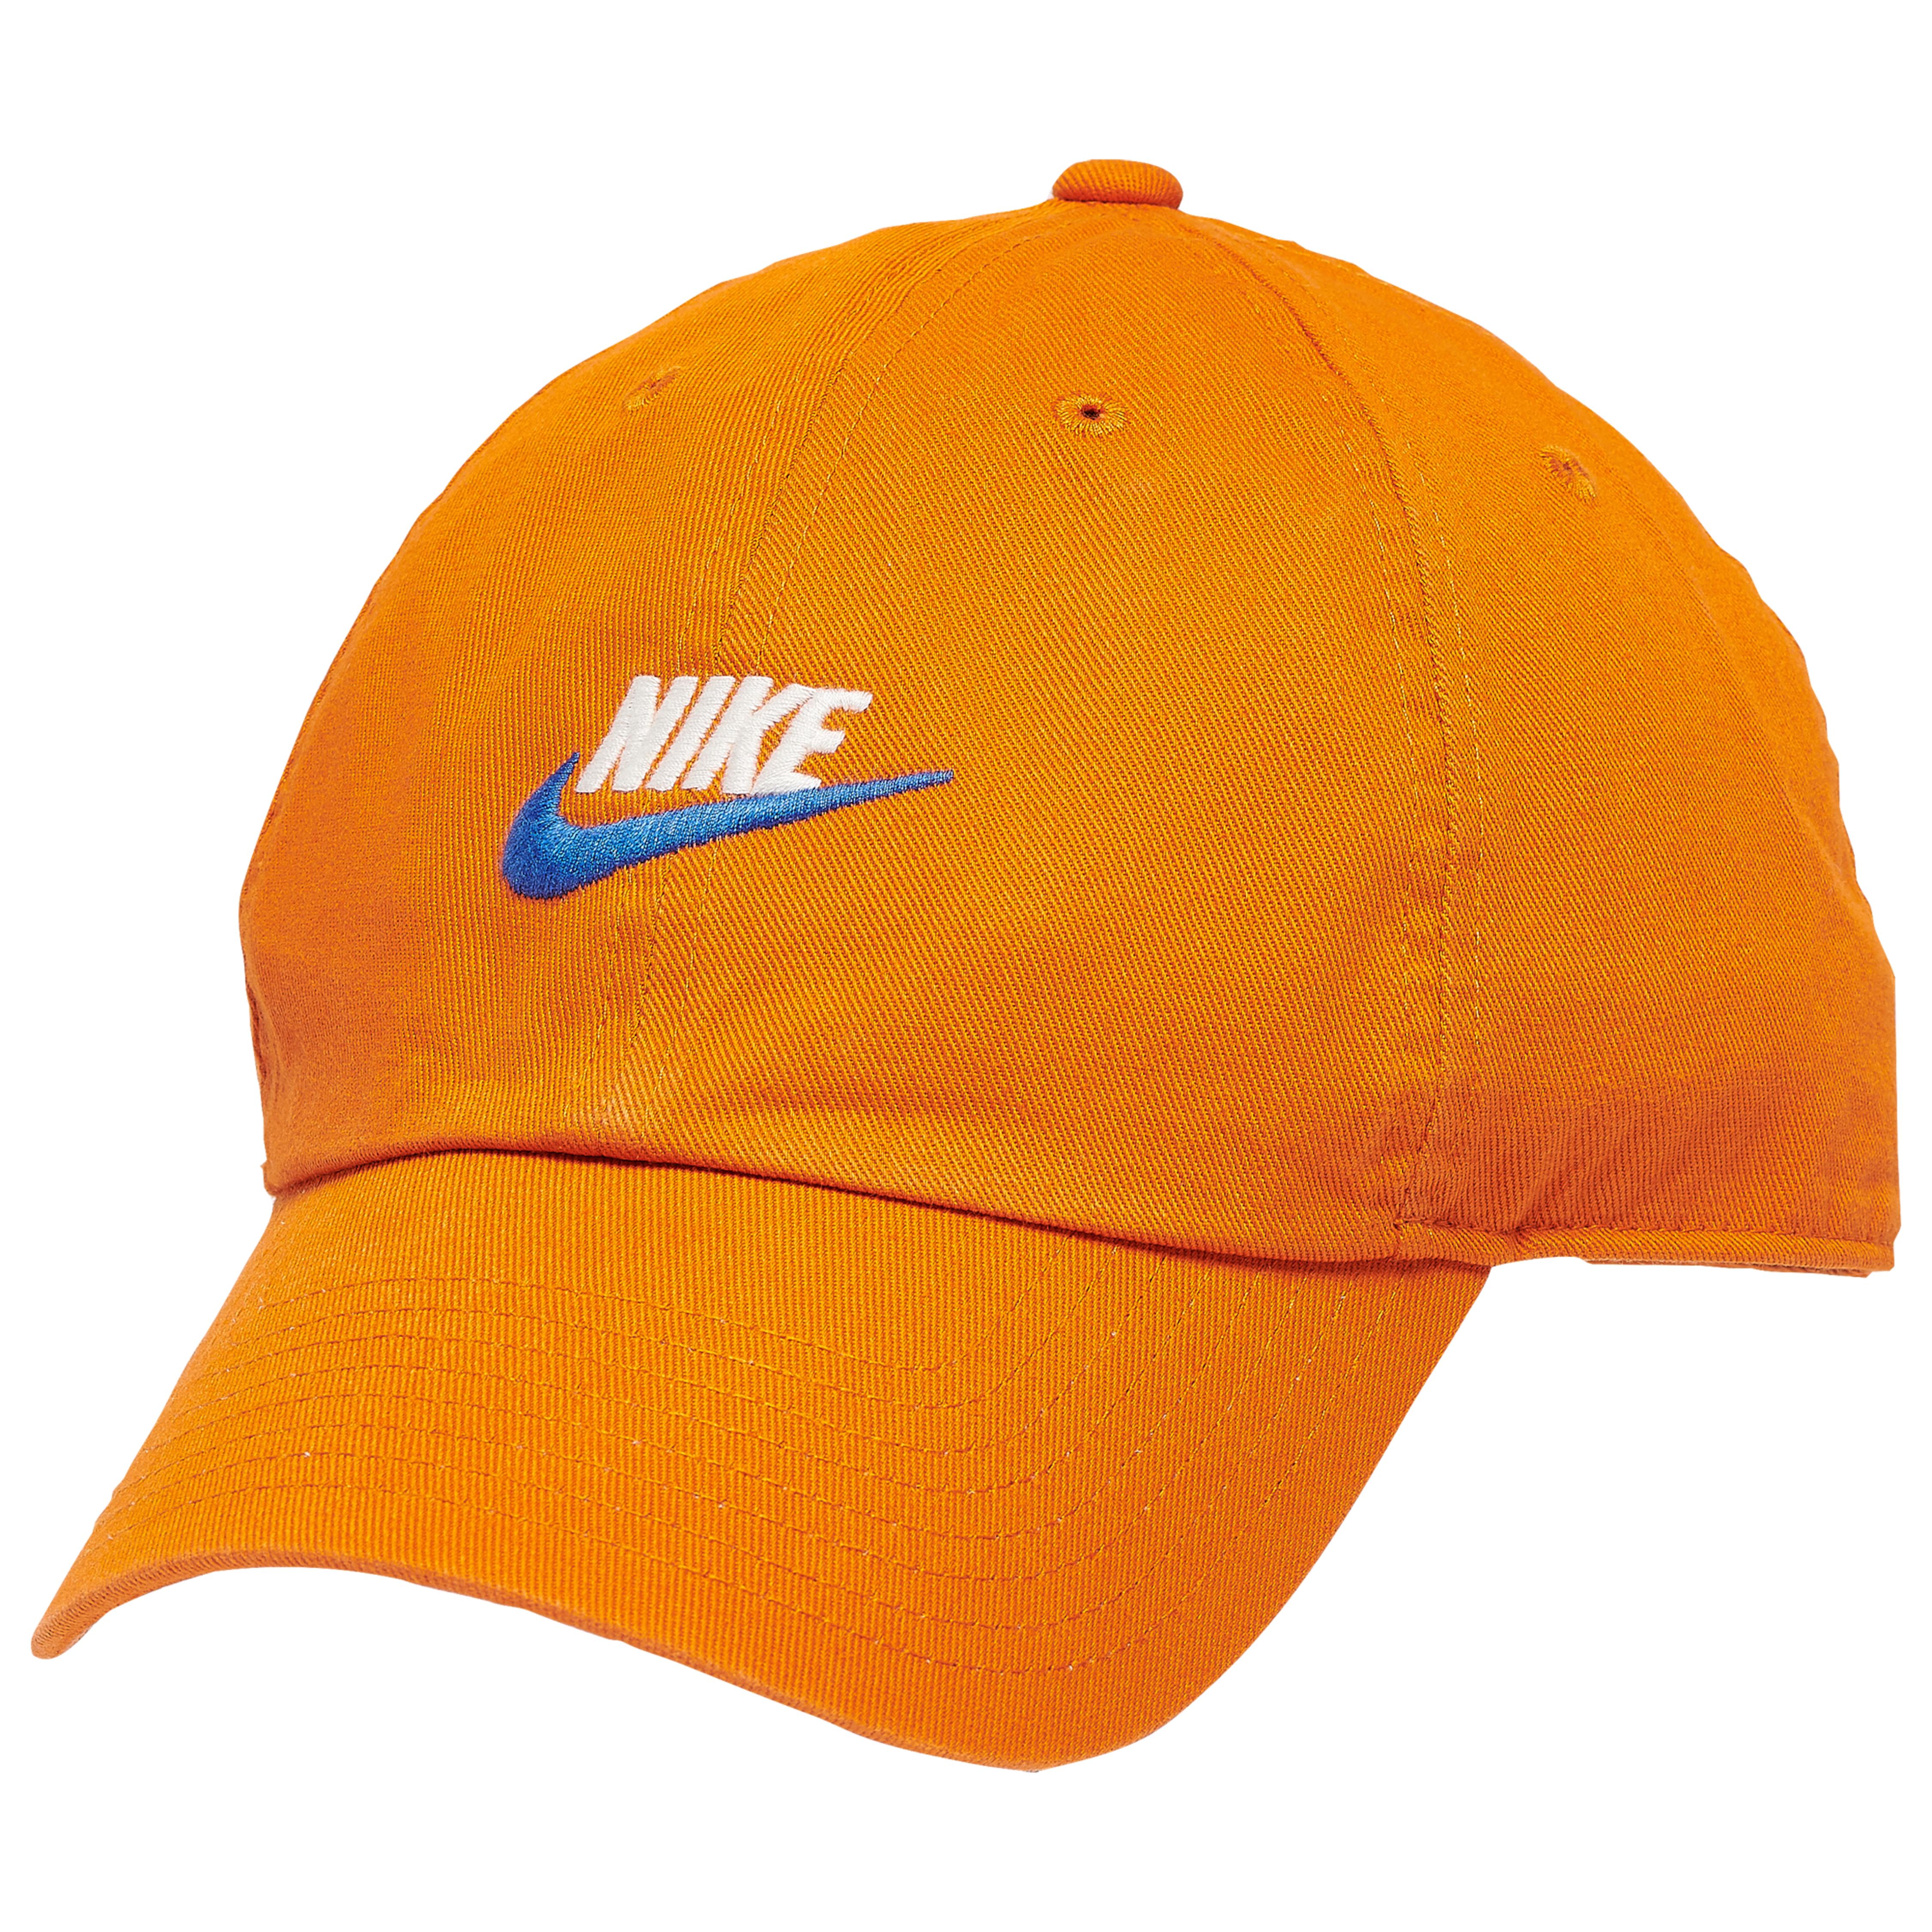 Nike Cotton H86 Futura Washed Cap in Orange for Men - Lyst